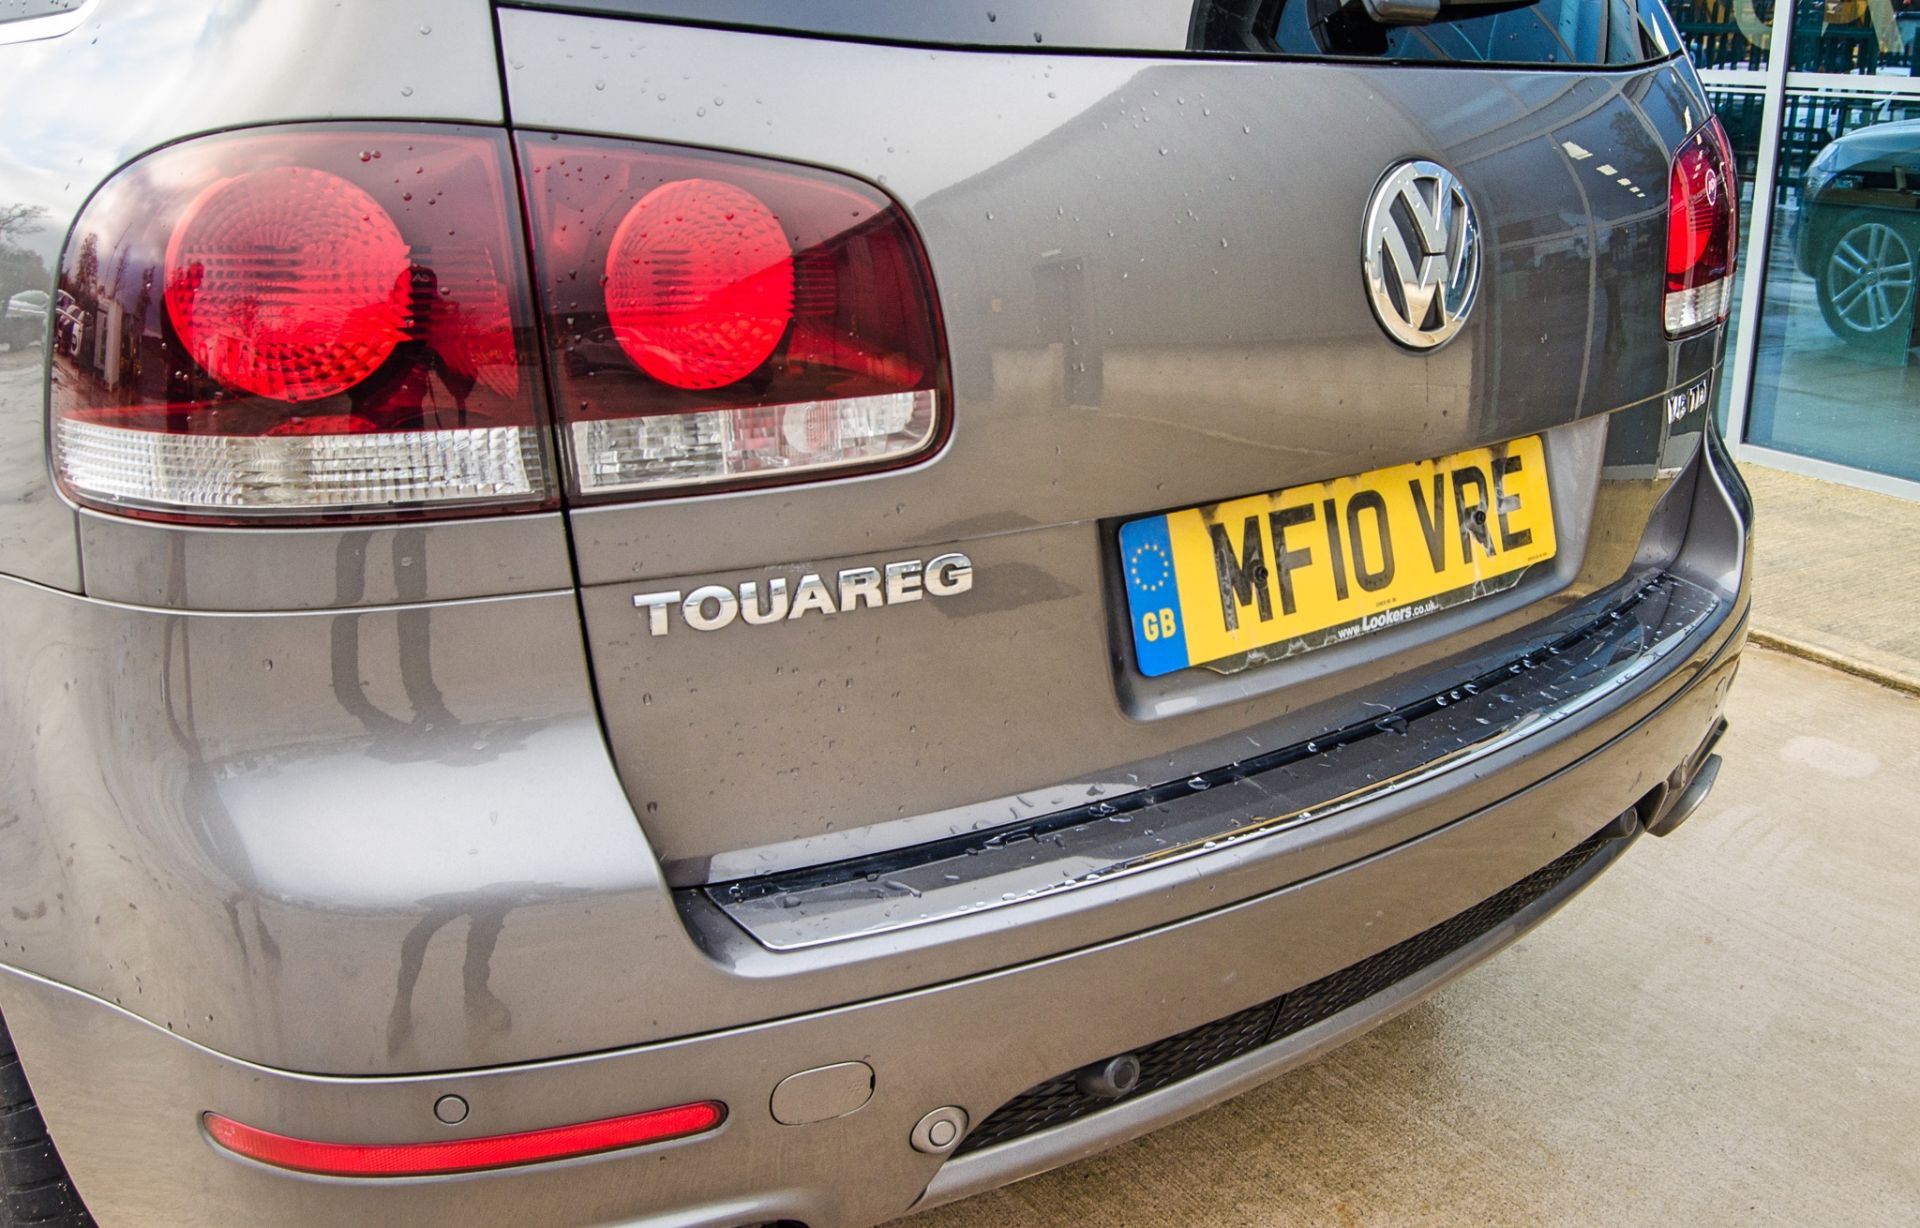 Volkswagen Touareg Altitude V6 2967cc TDi automatic 5 door estate car Registration Number: MF10 - Image 12 of 37